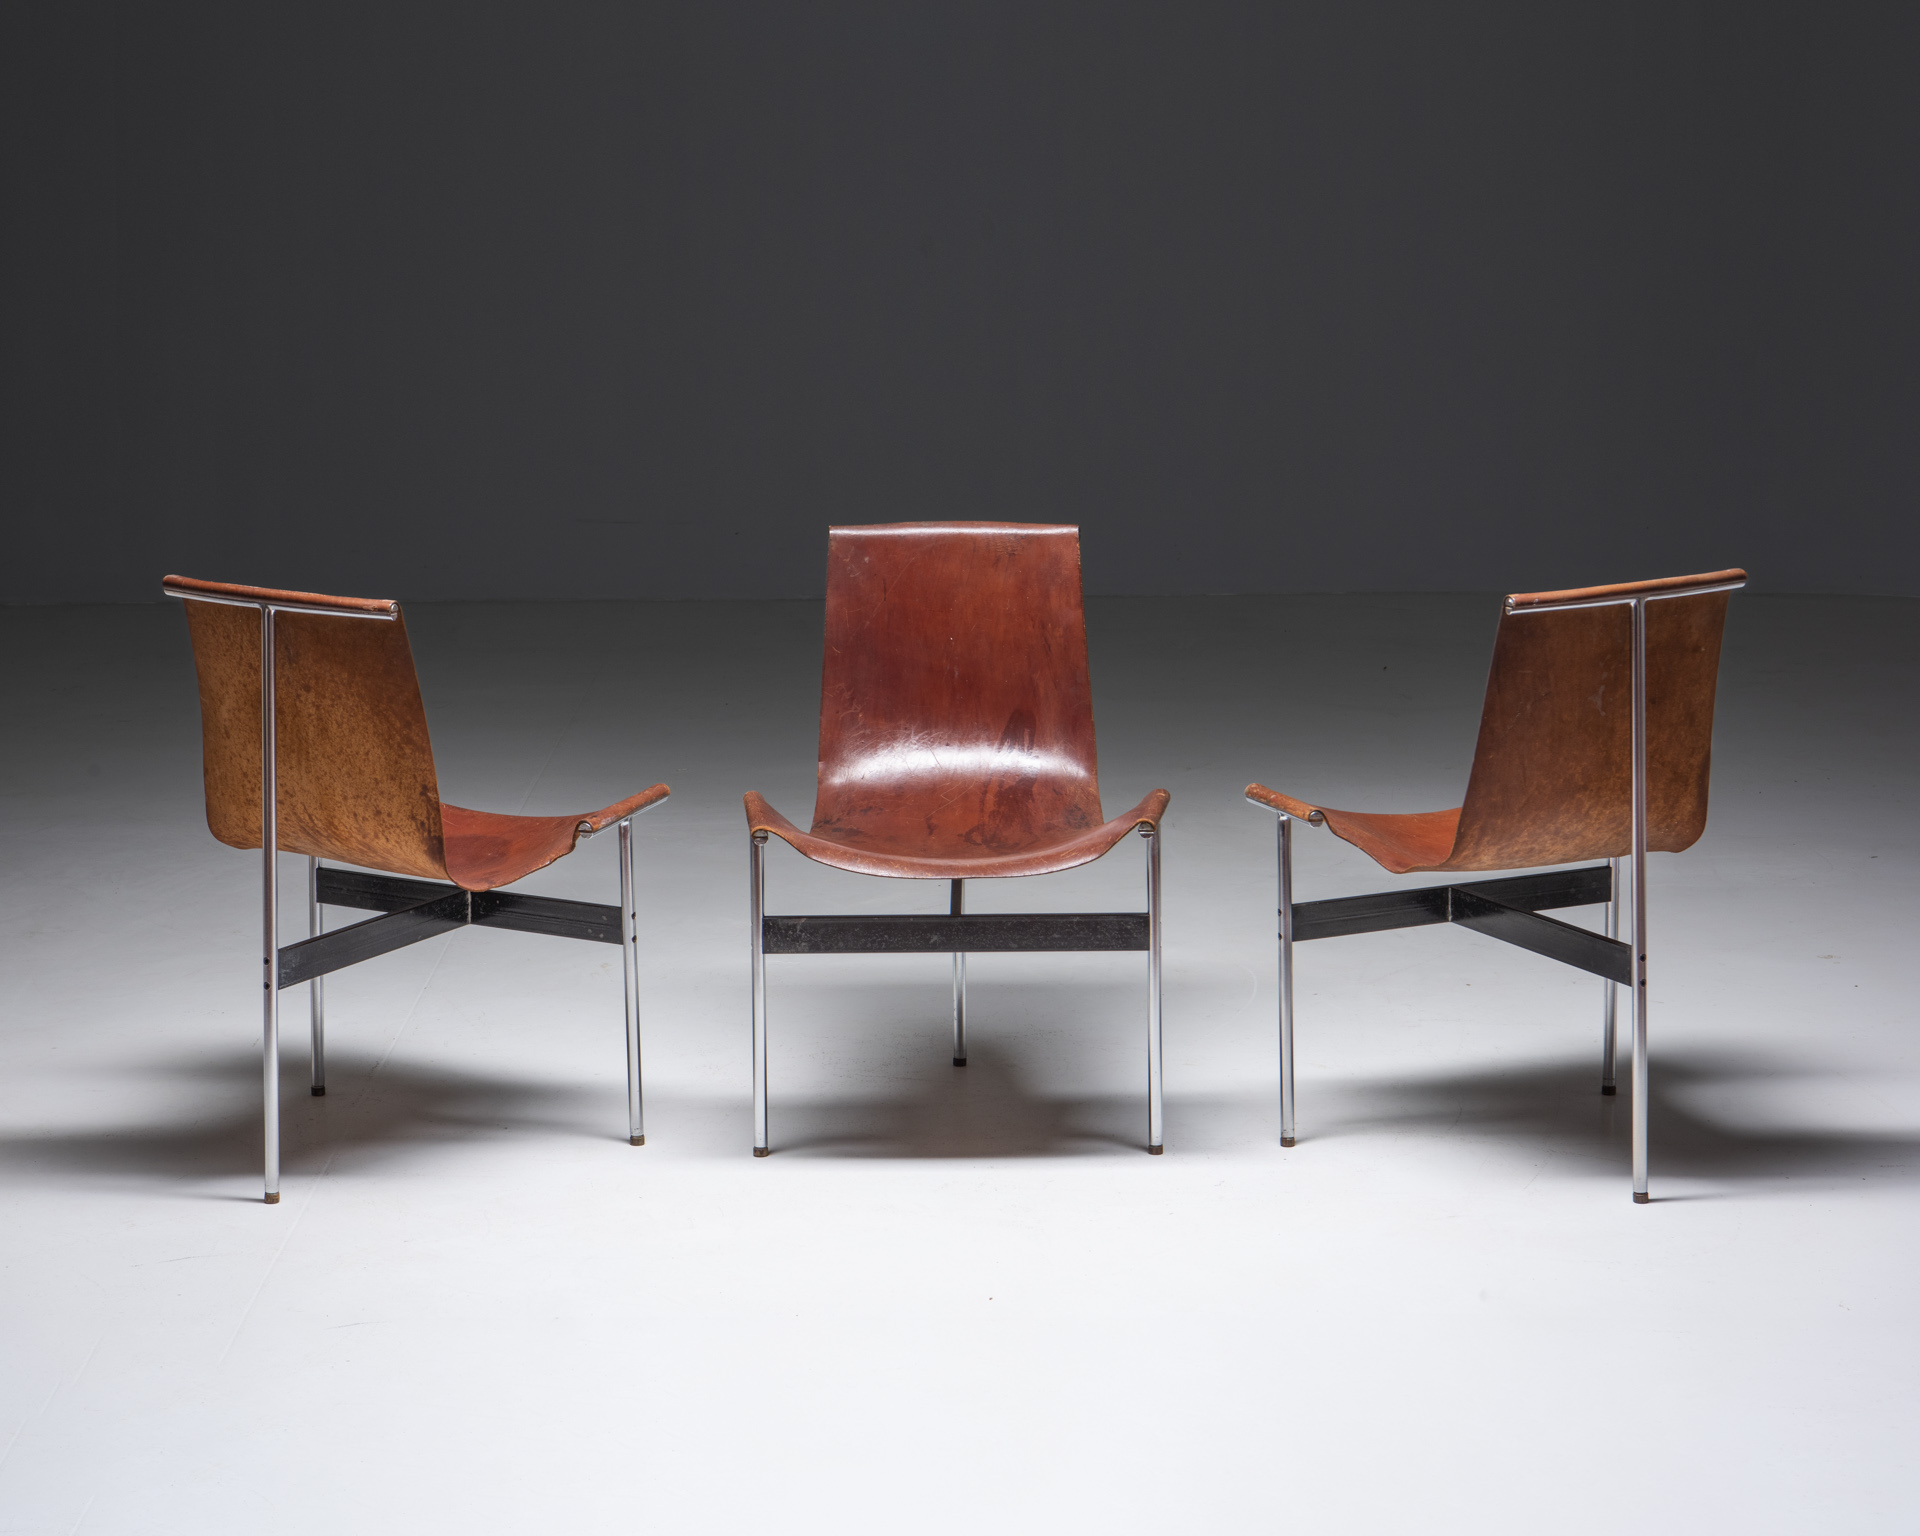 cs0326x-3lc-chairs0a0akelly-ross-littel-william-katavolos1950s_1